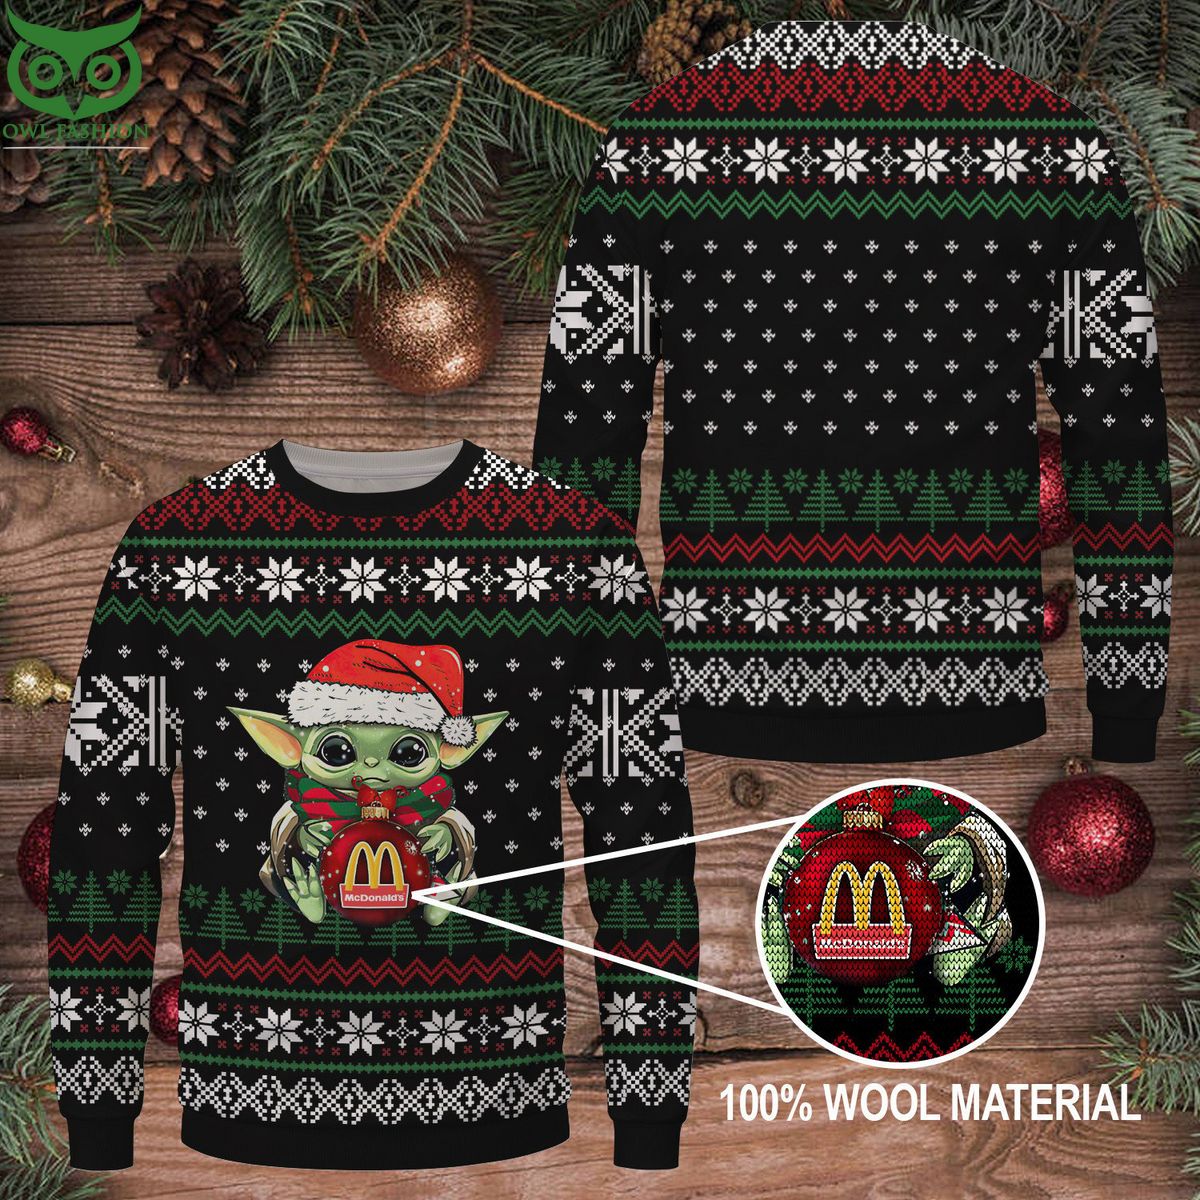 mcdonald's baby Yoda Premium Ugly Sweater